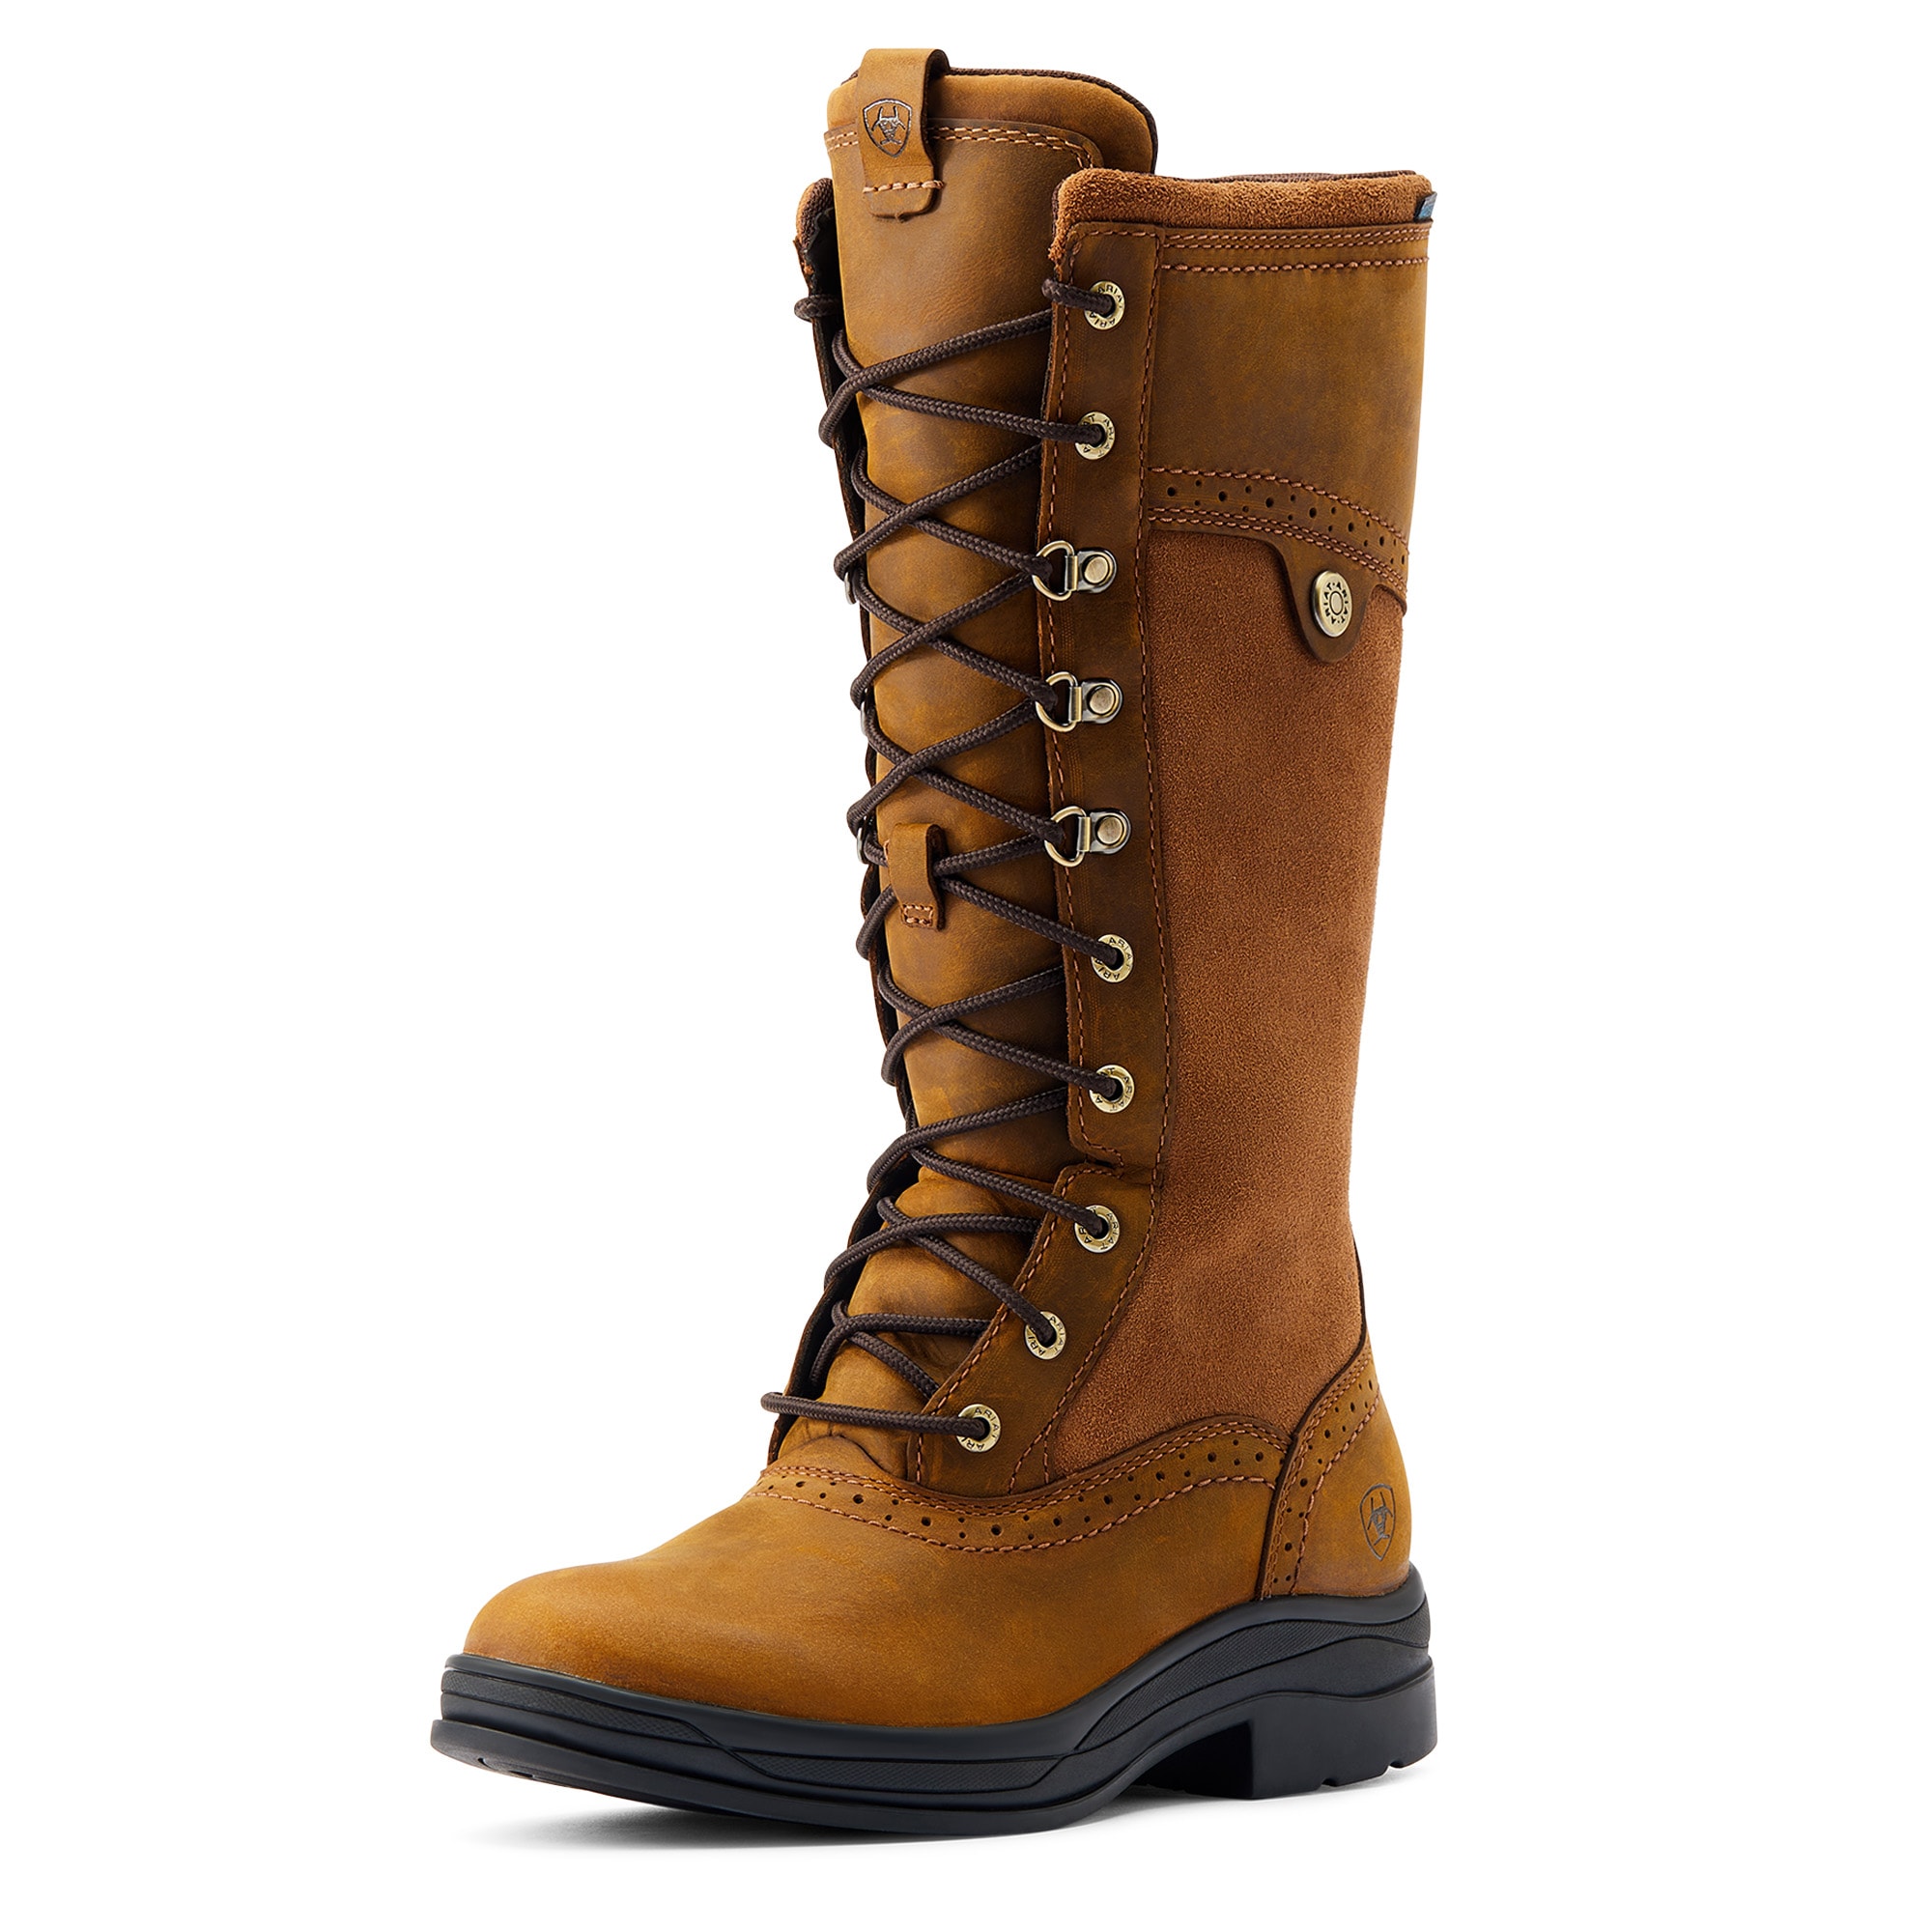 Wythburn Waterproof Boots - Brown